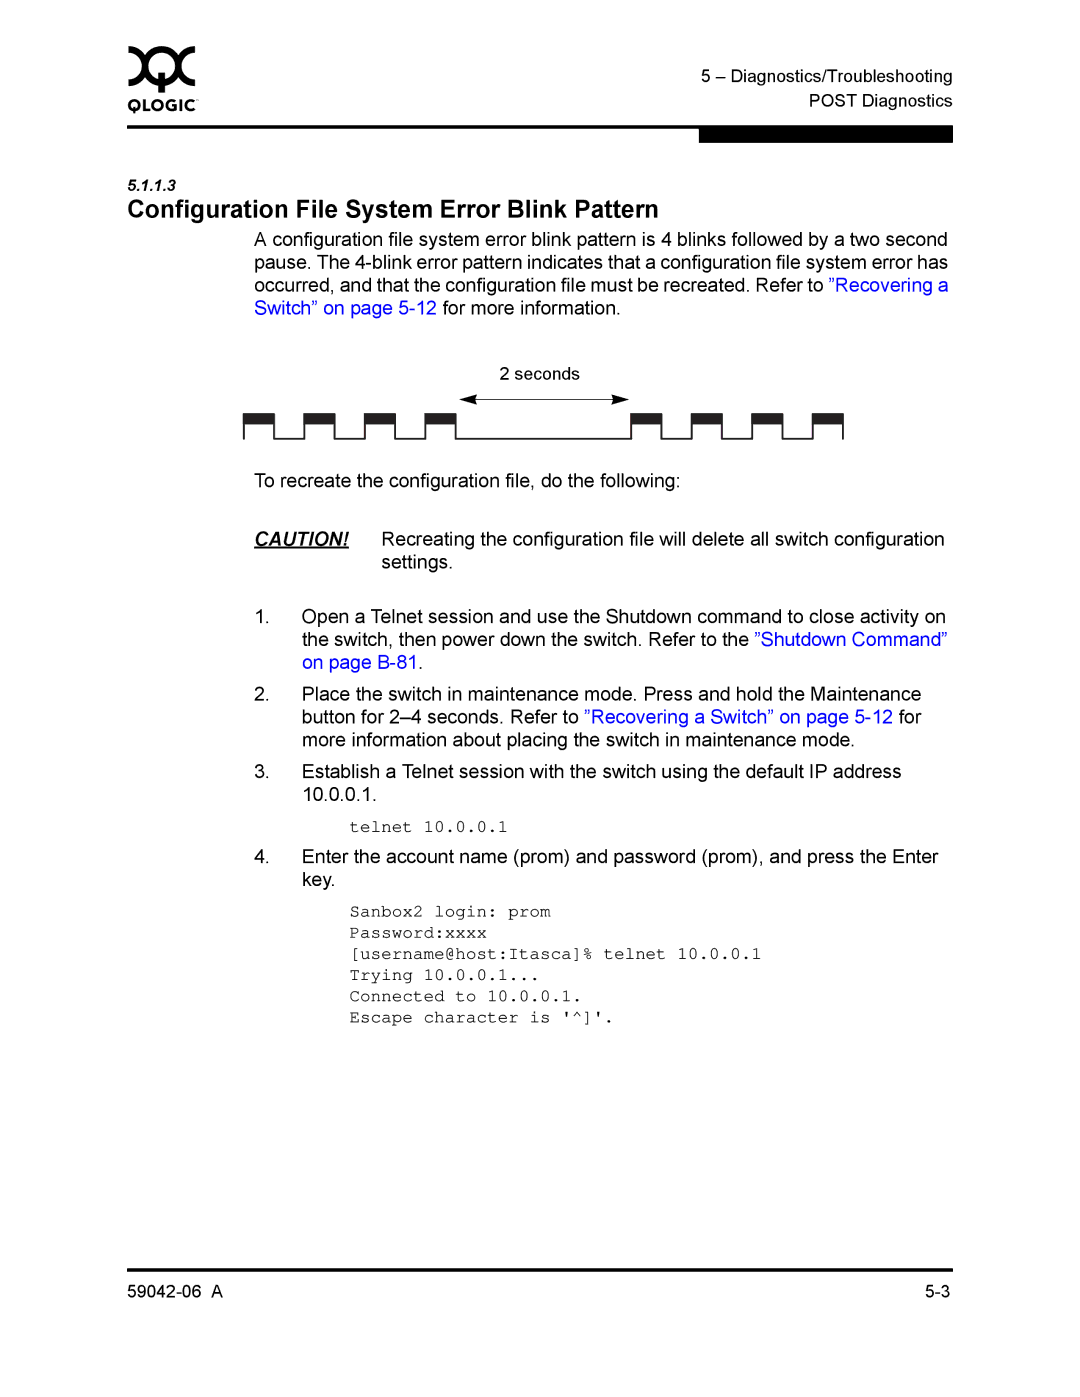 Q-Logic 2-8C manual Configuration File System Error Blink Pattern 